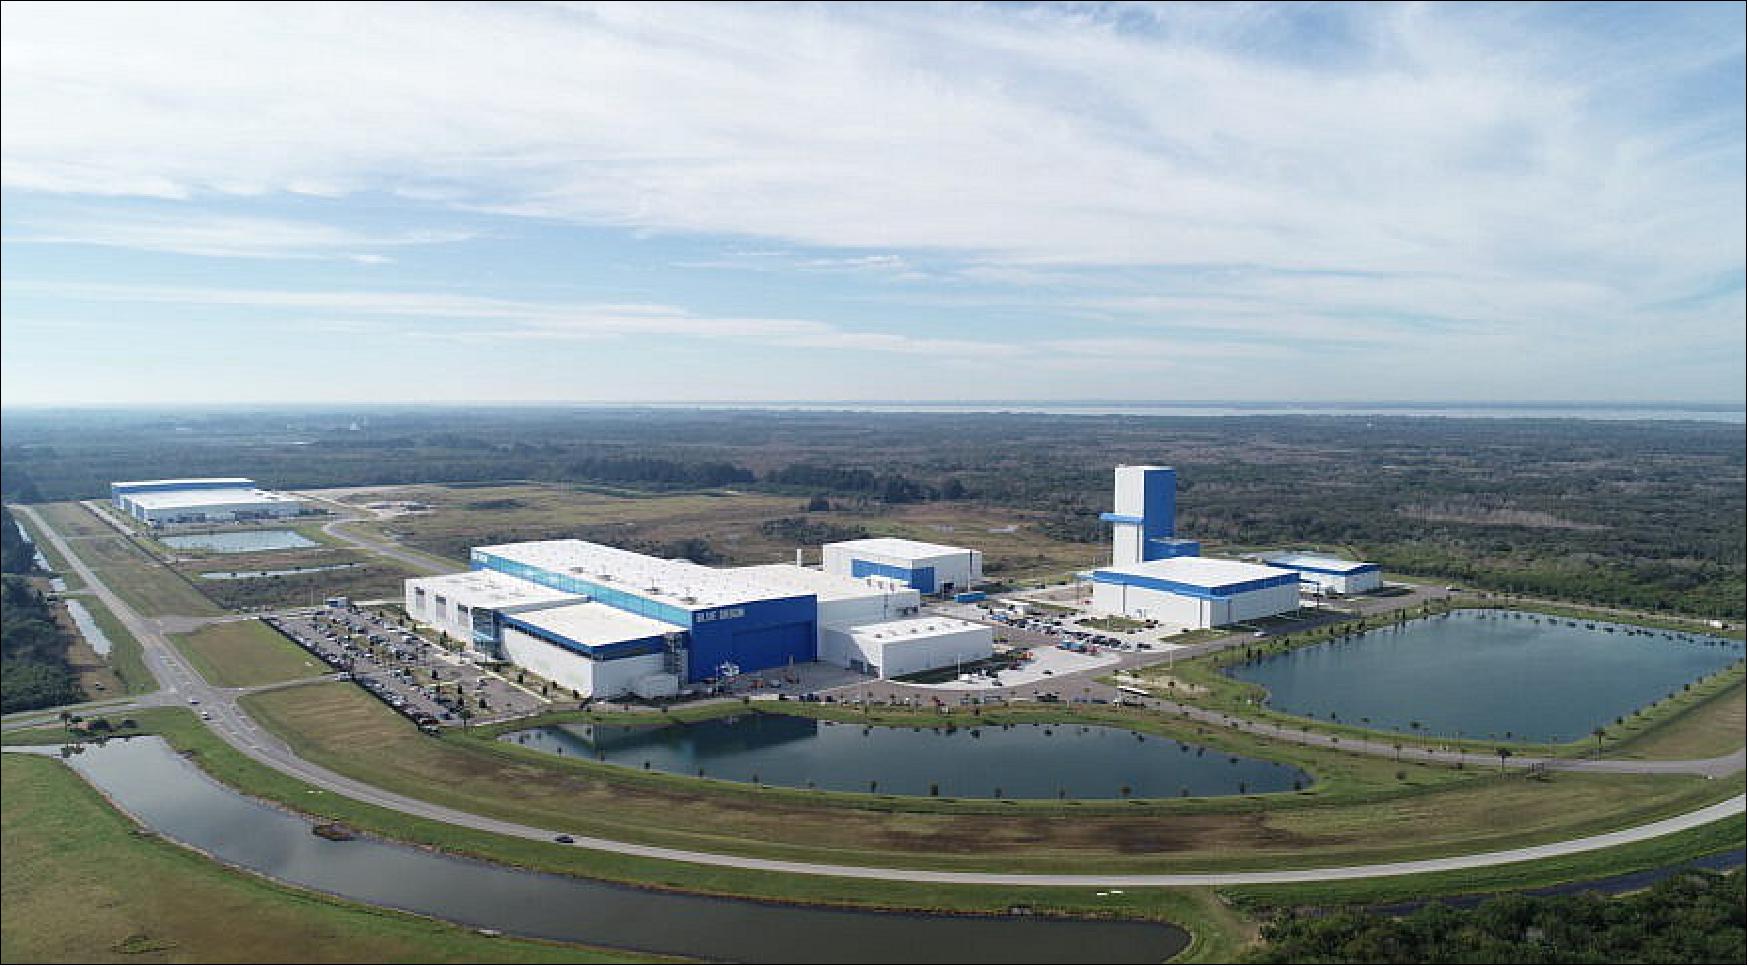 Figure 5: Aerial view of Blue Origin's New Glenn rocket factory at Cape Canaveral, Florida (image credit: Blue Origin)